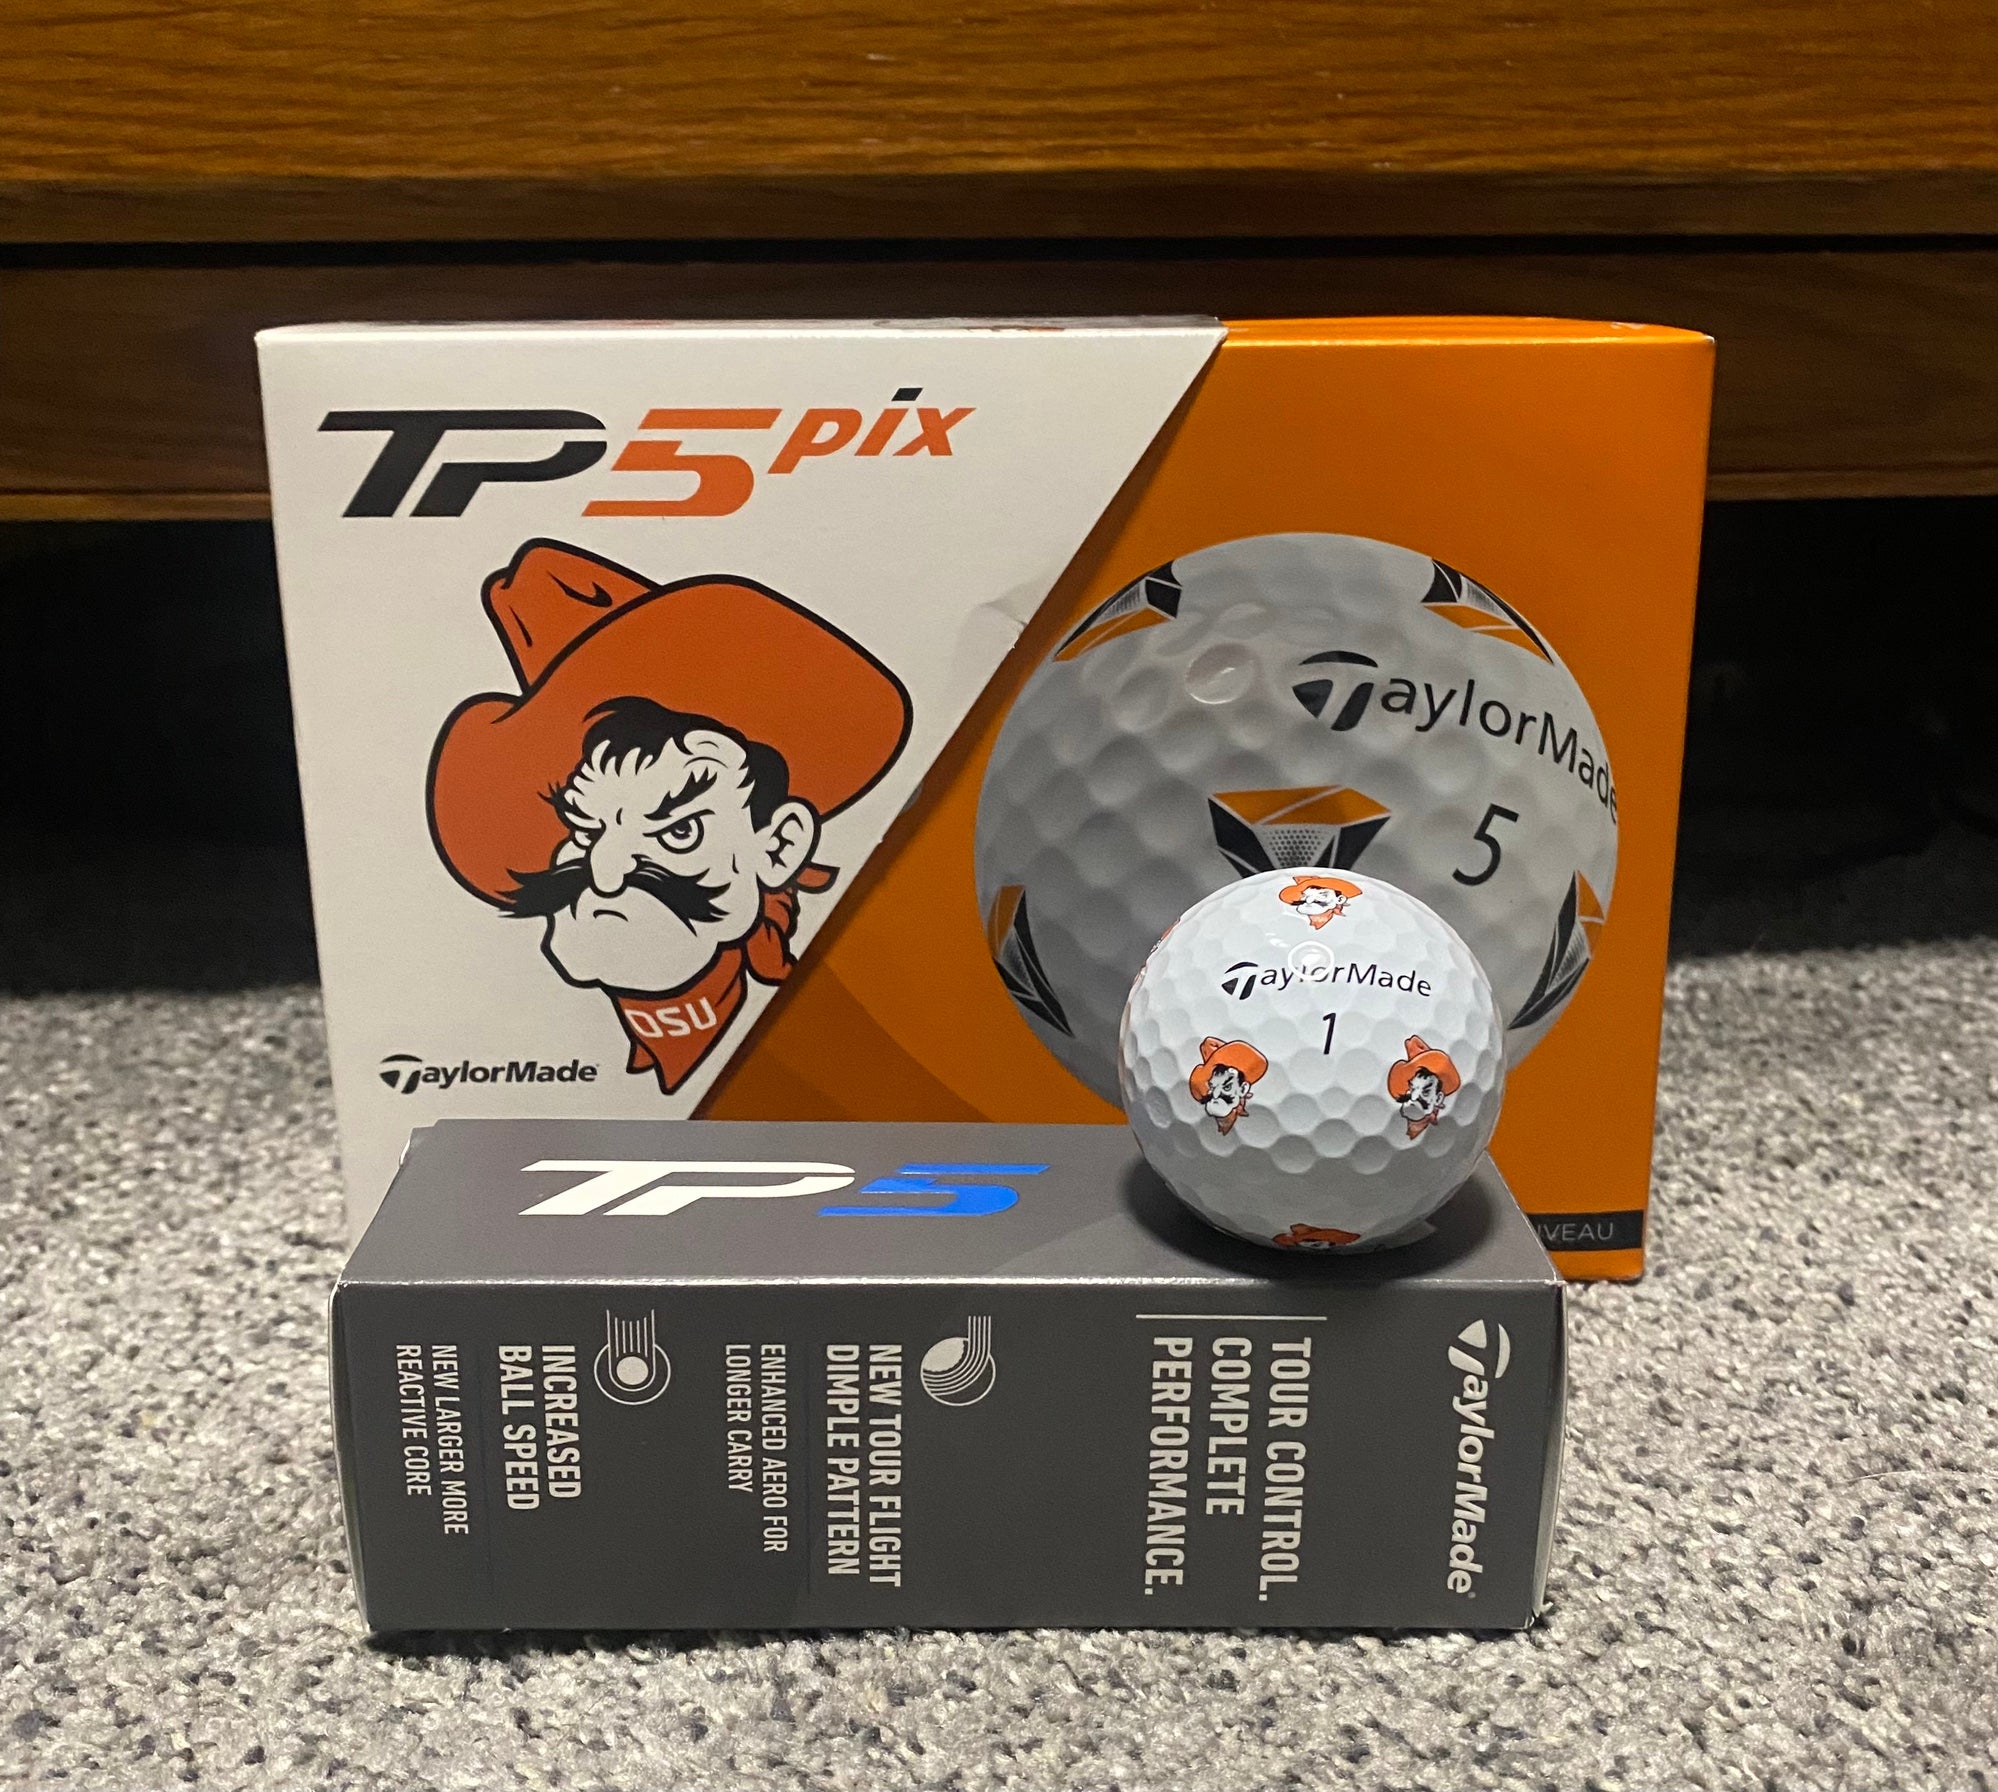 New Limited Edition TaylorMade TP5 pix POKER Golf Balls *Rare